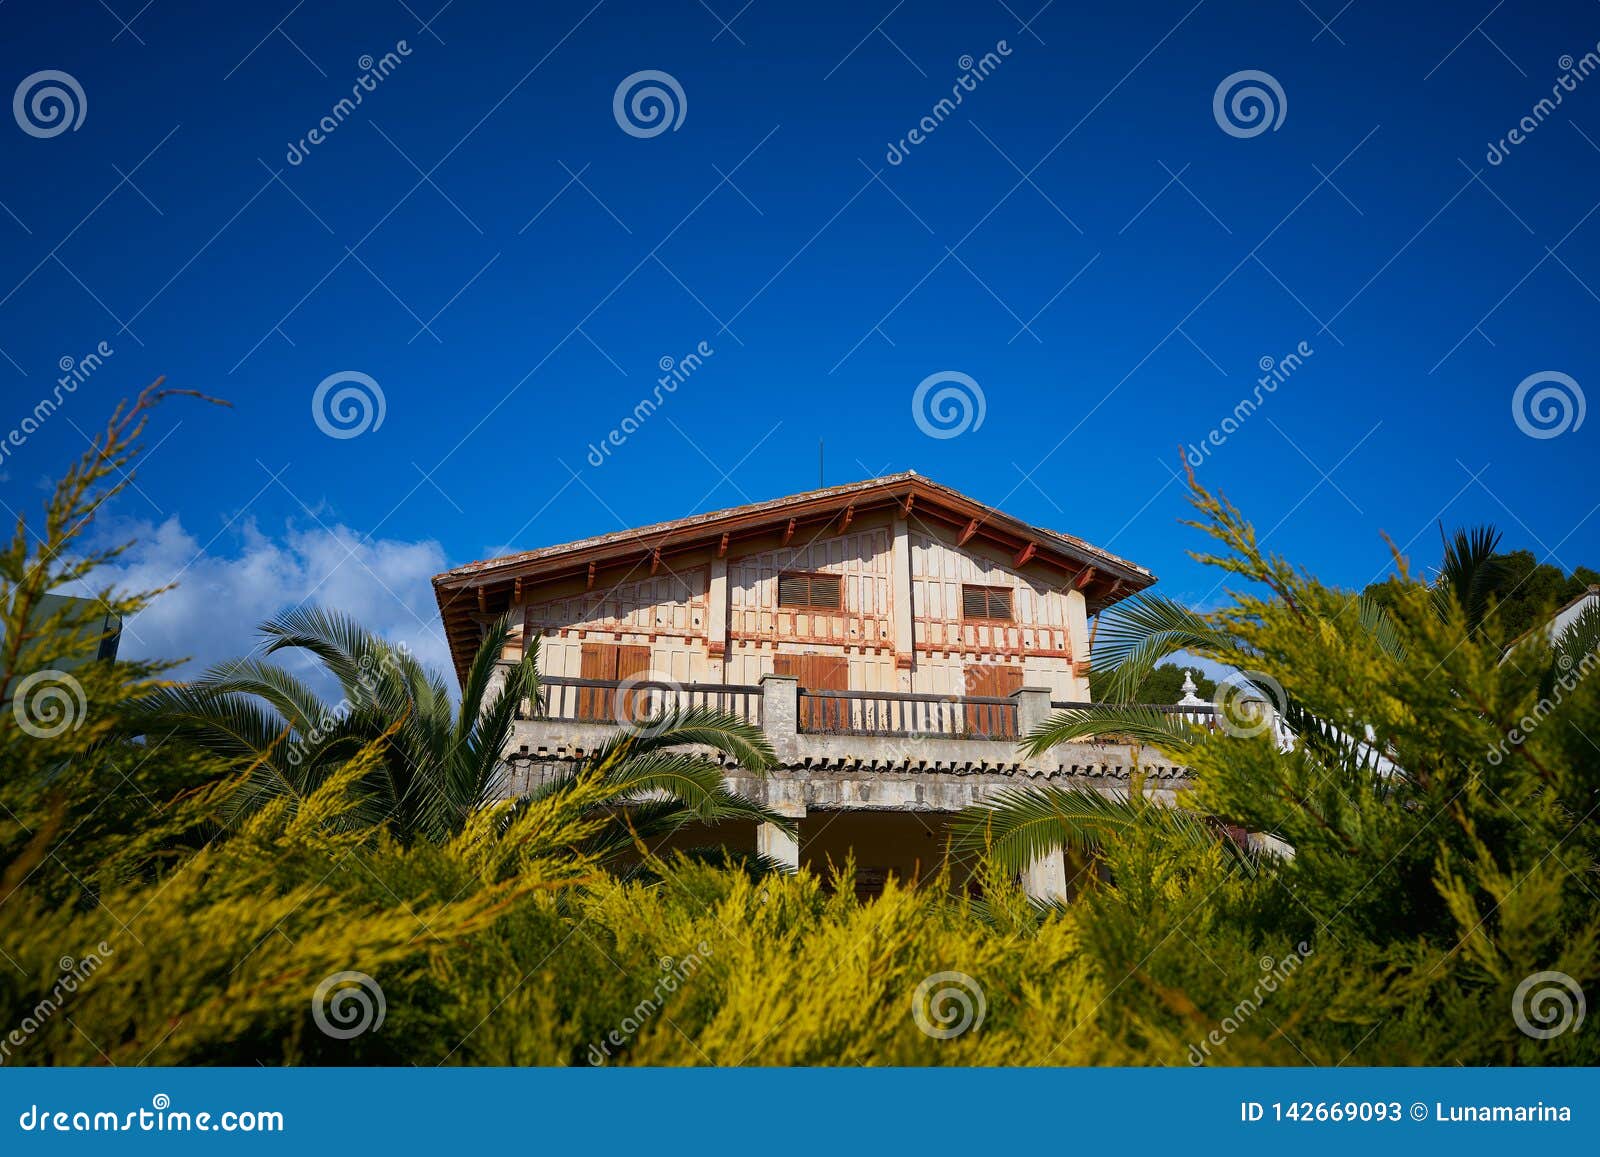 villa gens herritage houses in benicassim